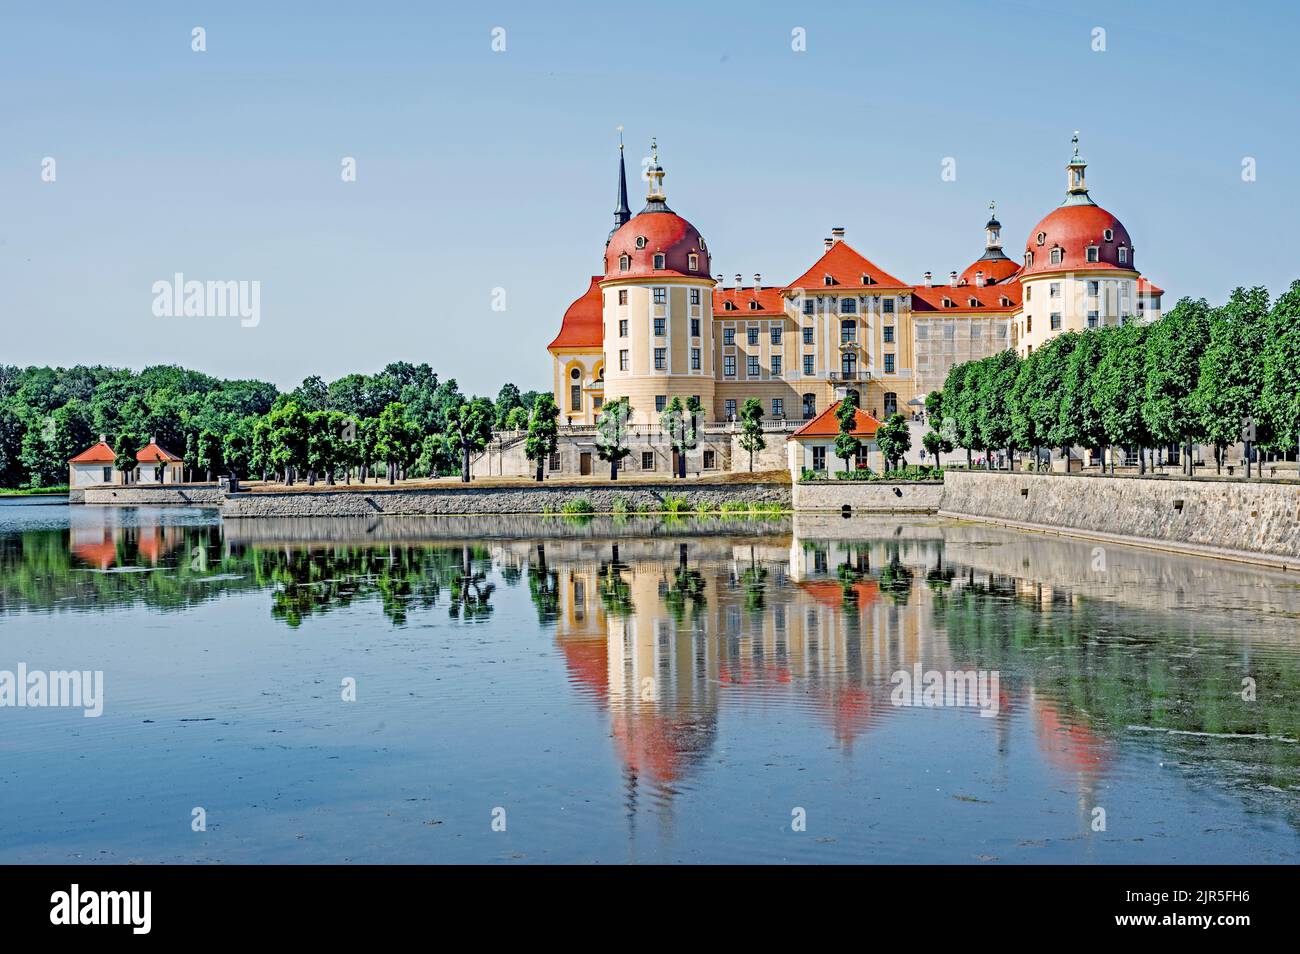 Schloss Moritzburg, Sachsen - Schloss Moritzburg bei Dresden, Sachsen, Deutschland Stockfoto